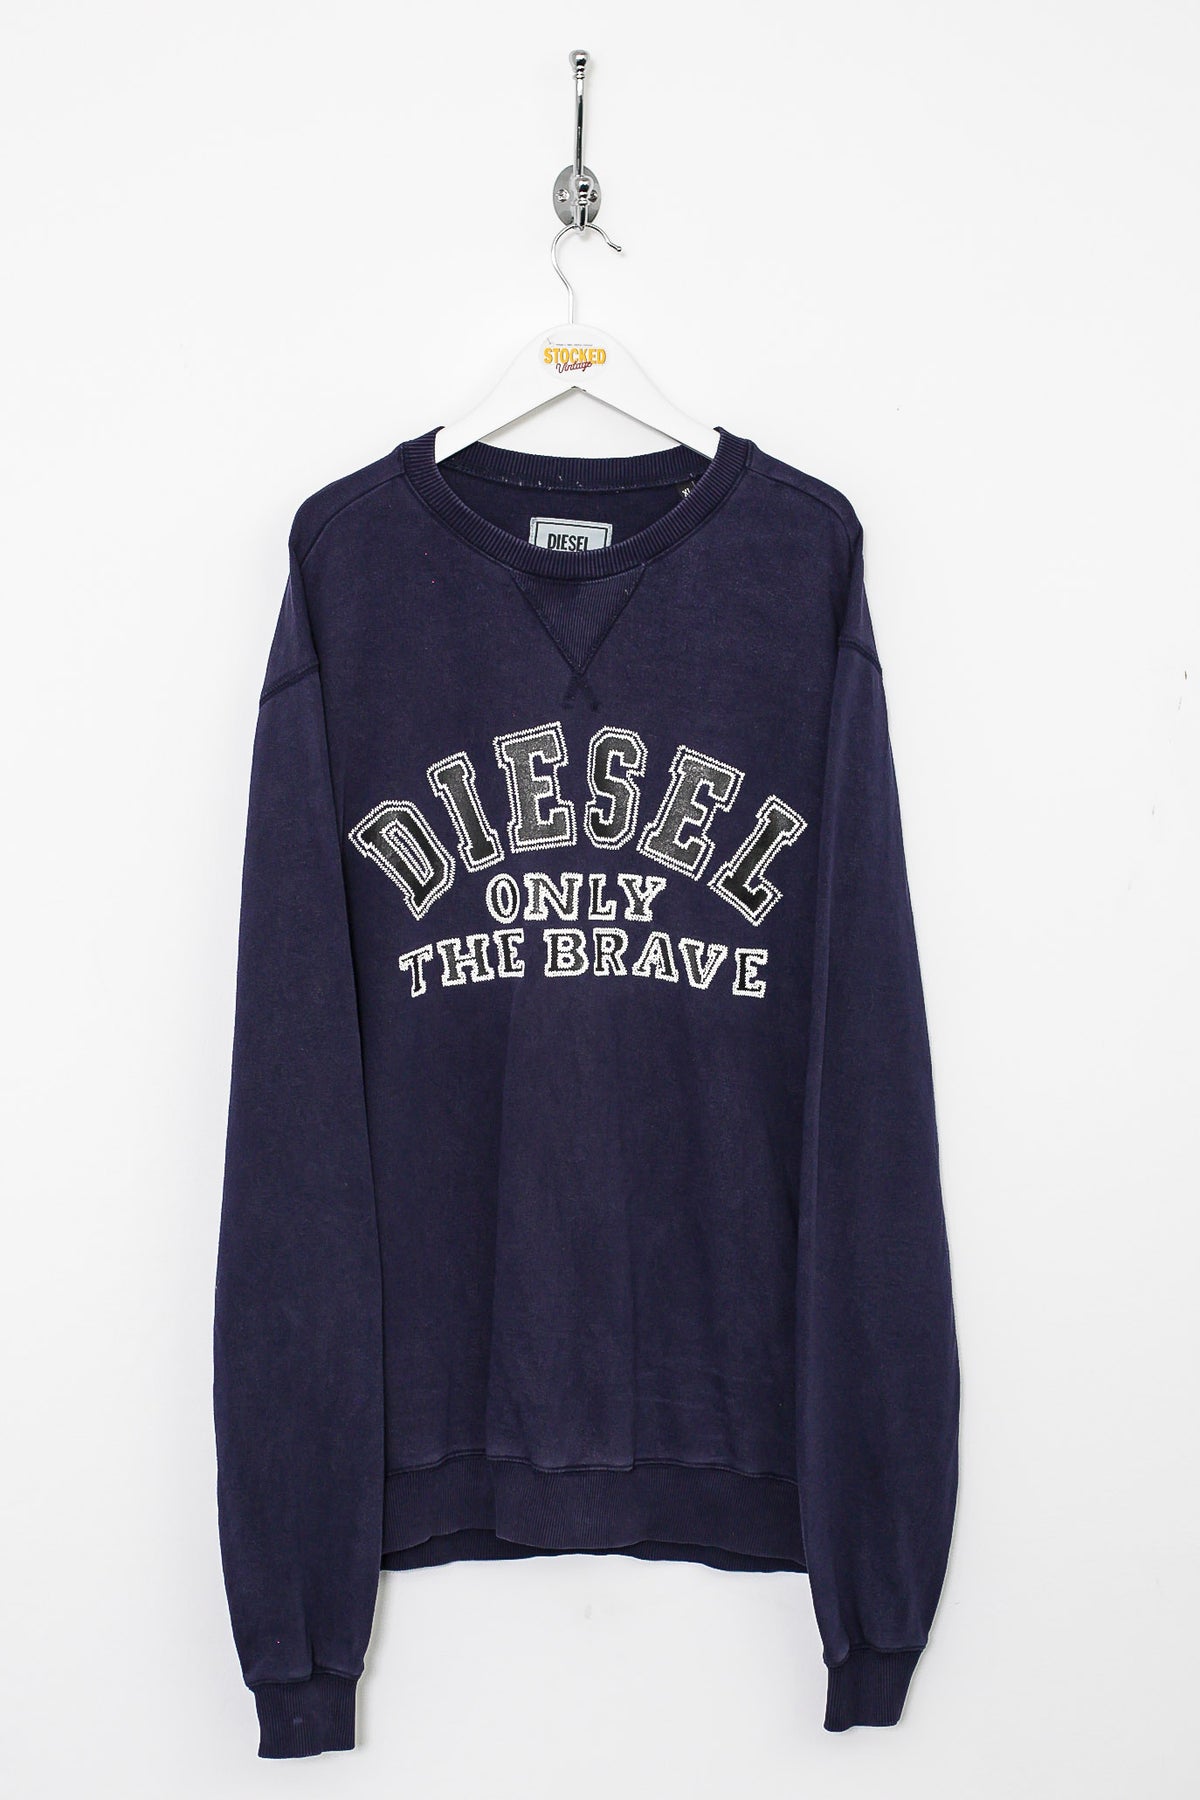 Diesel Sweatshirt (XL)